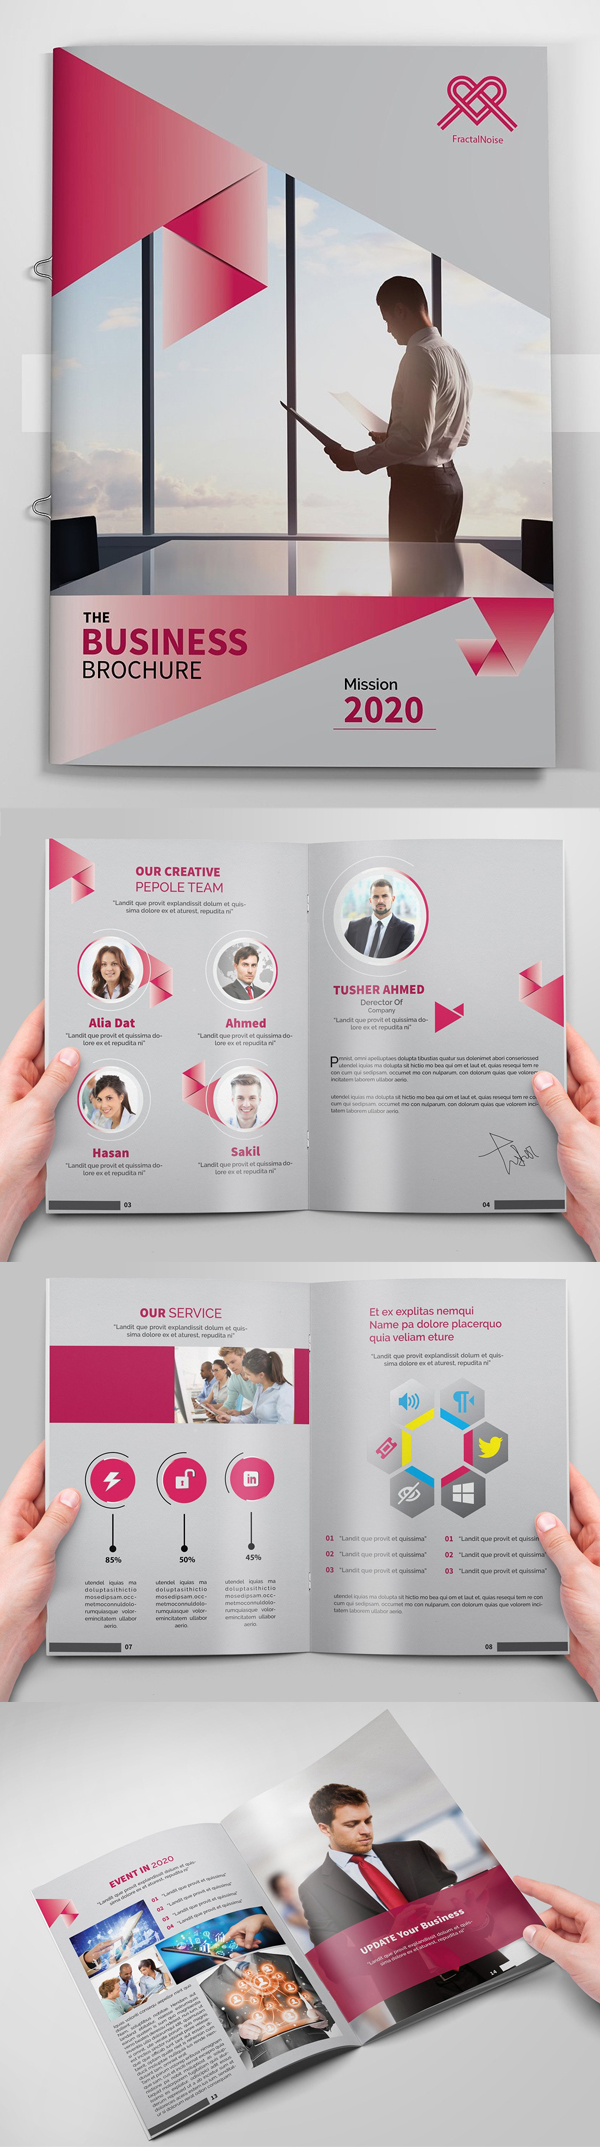 100 Professional Corporate Brochure Templates - 65